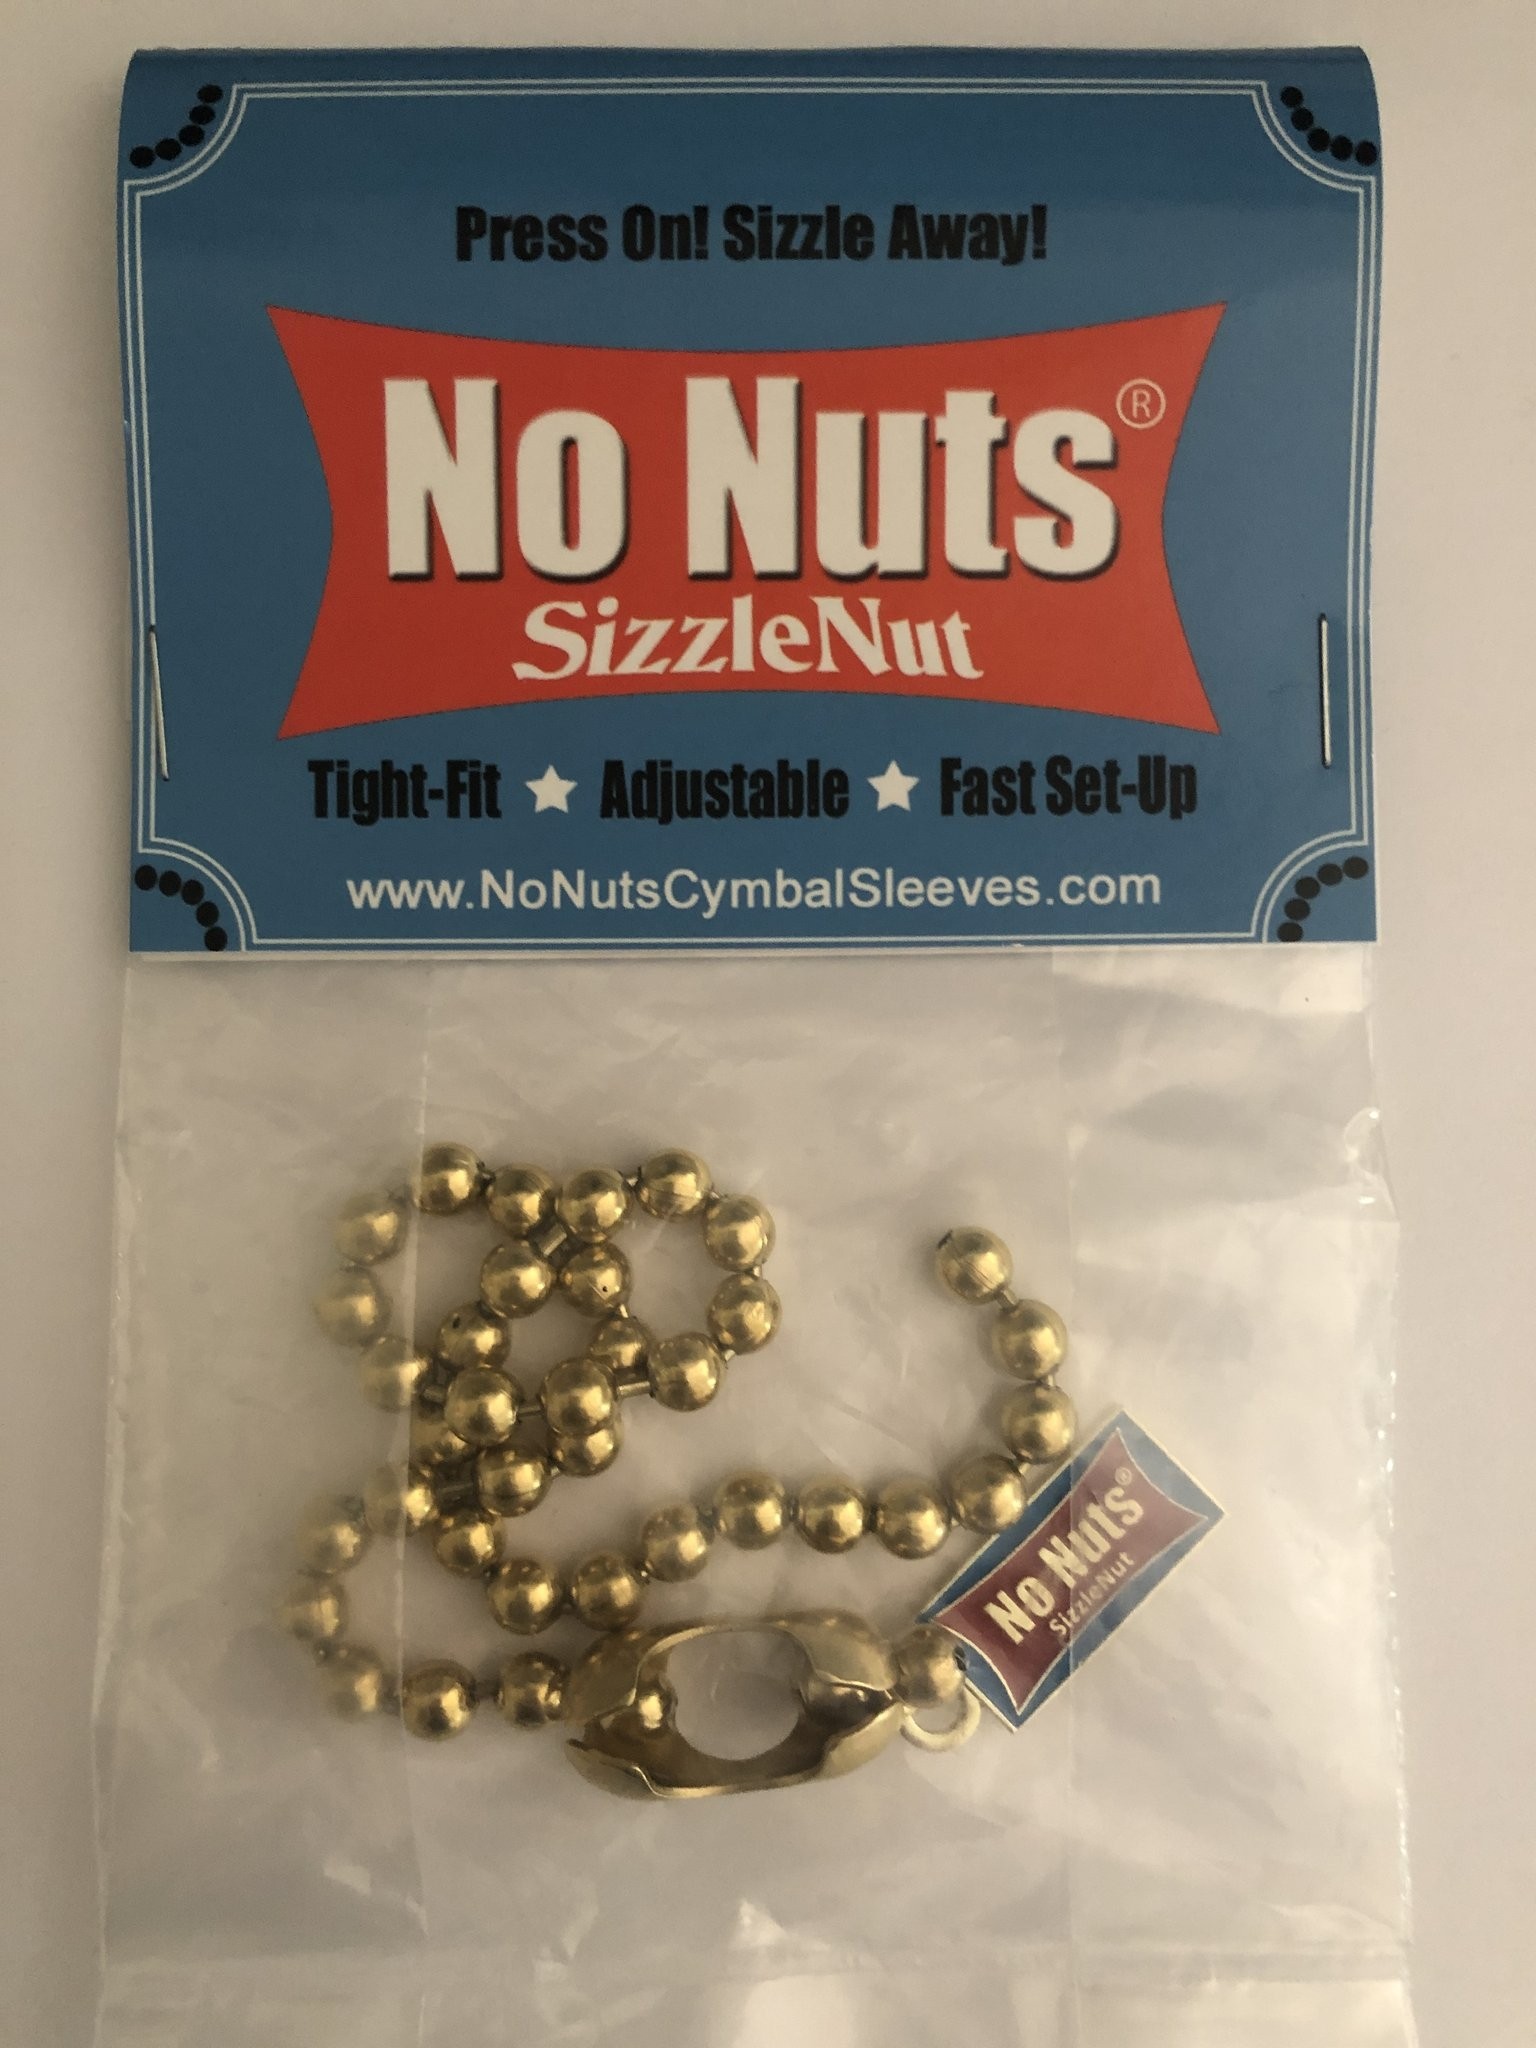 No Nuts SizzleNut